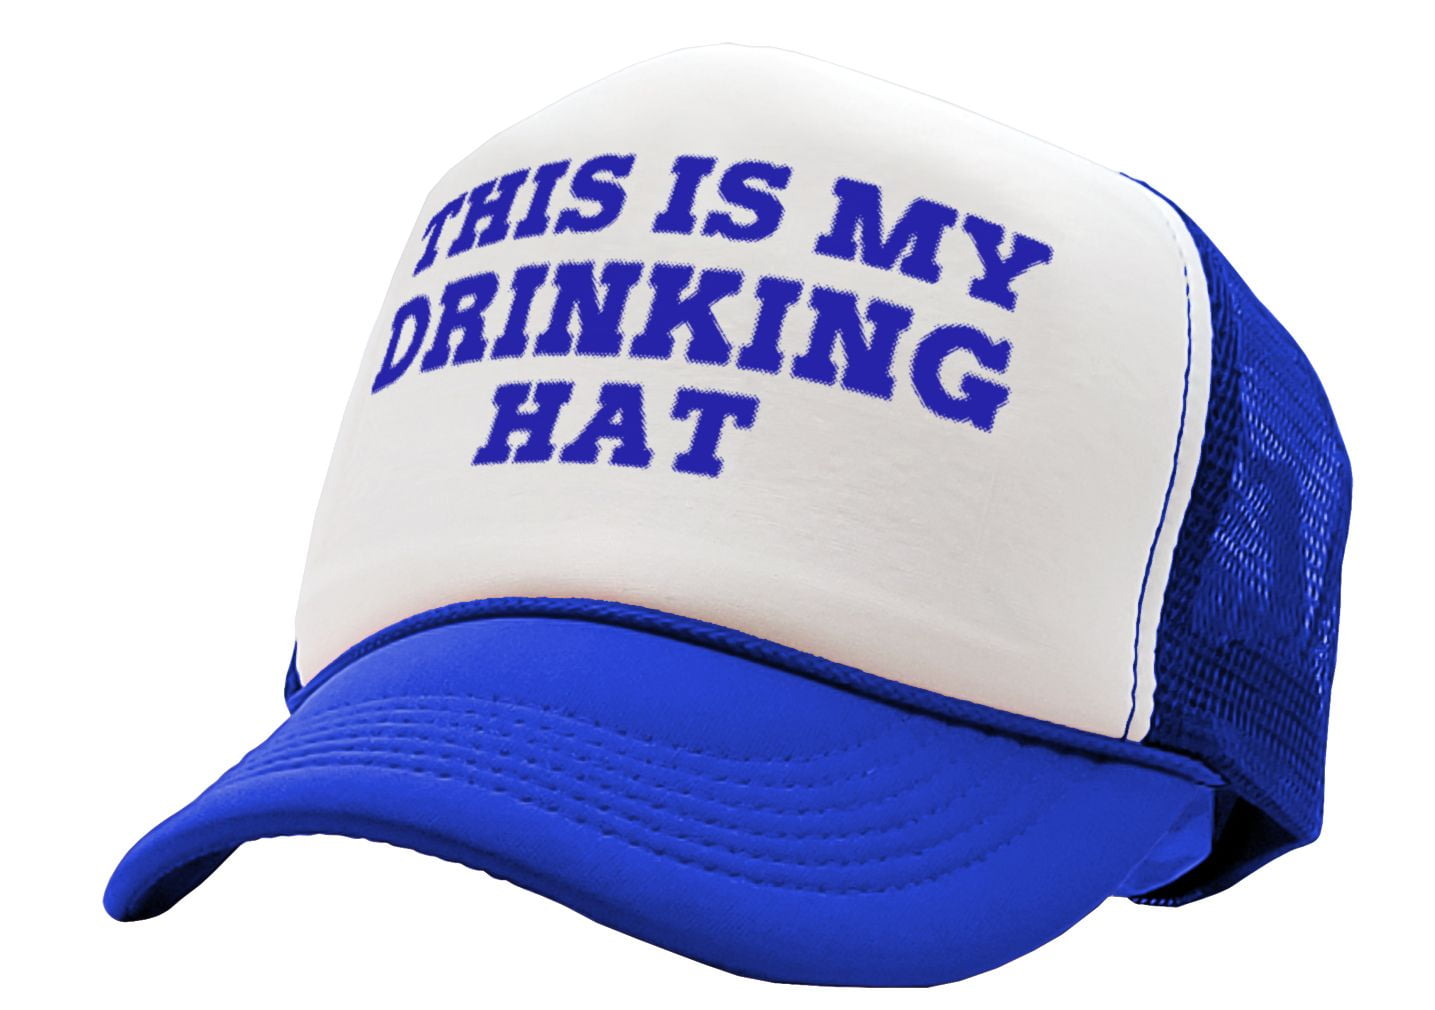 Sunisery Beer Soda Drinks Guzzler Helmet Drinking Hat Straw Hat Birthday Party Hat, Adult Unisex, Size: One size, Pink